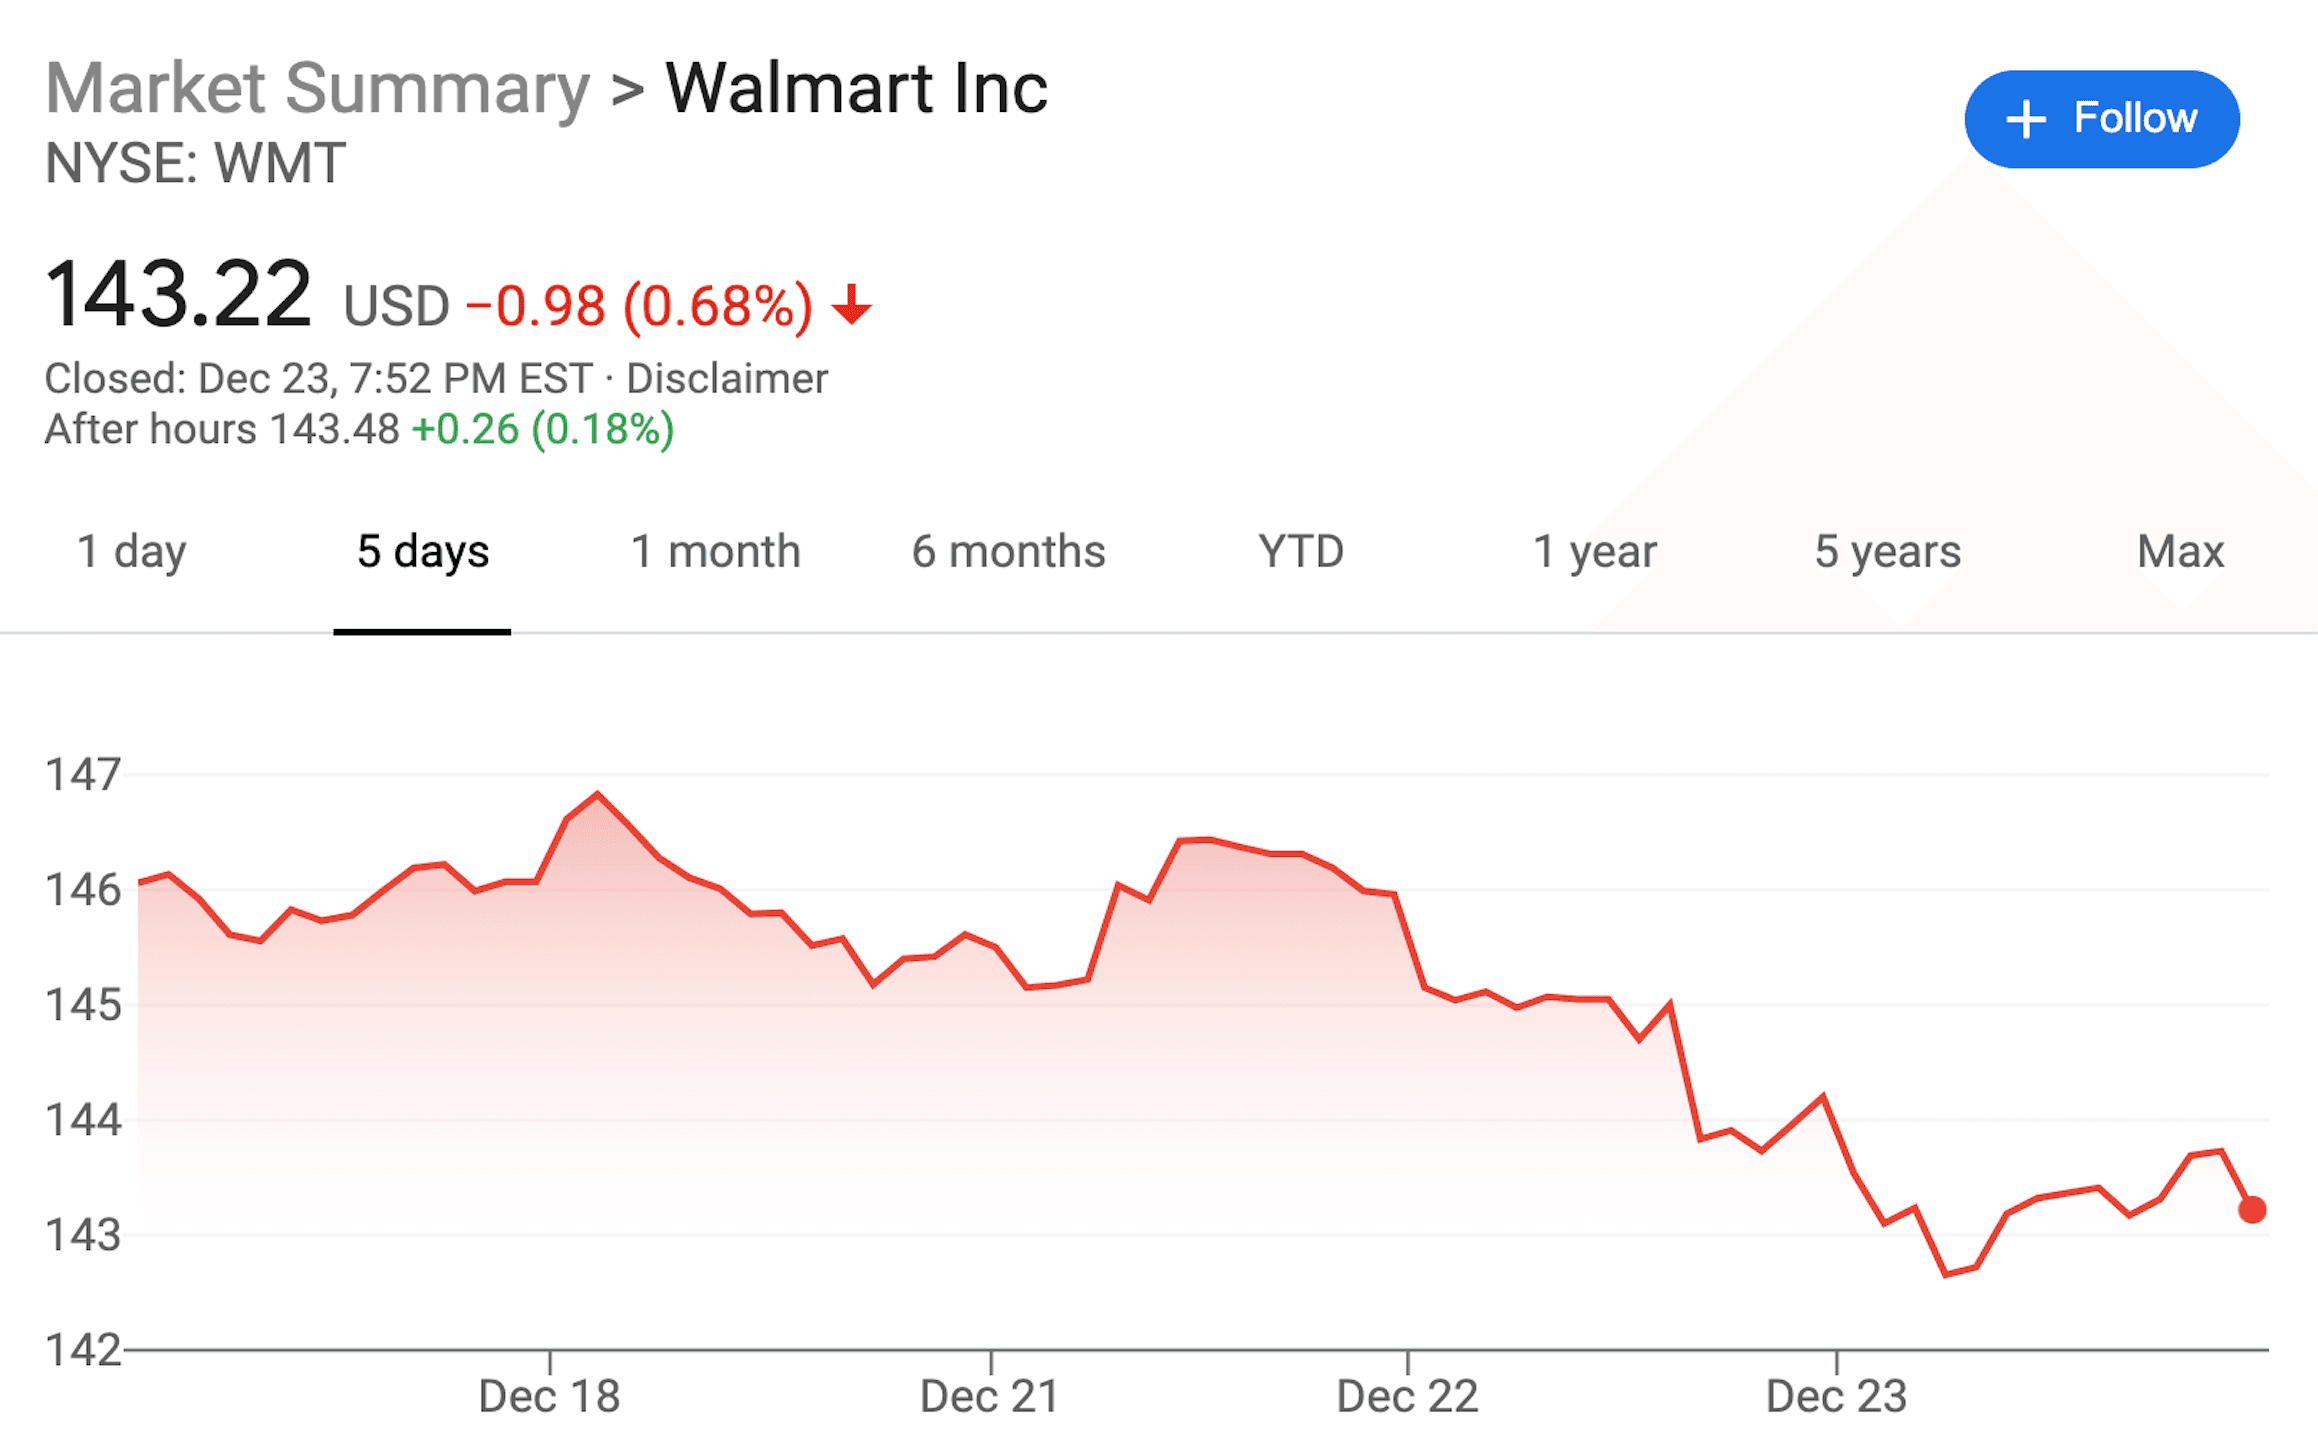 Walmart stock